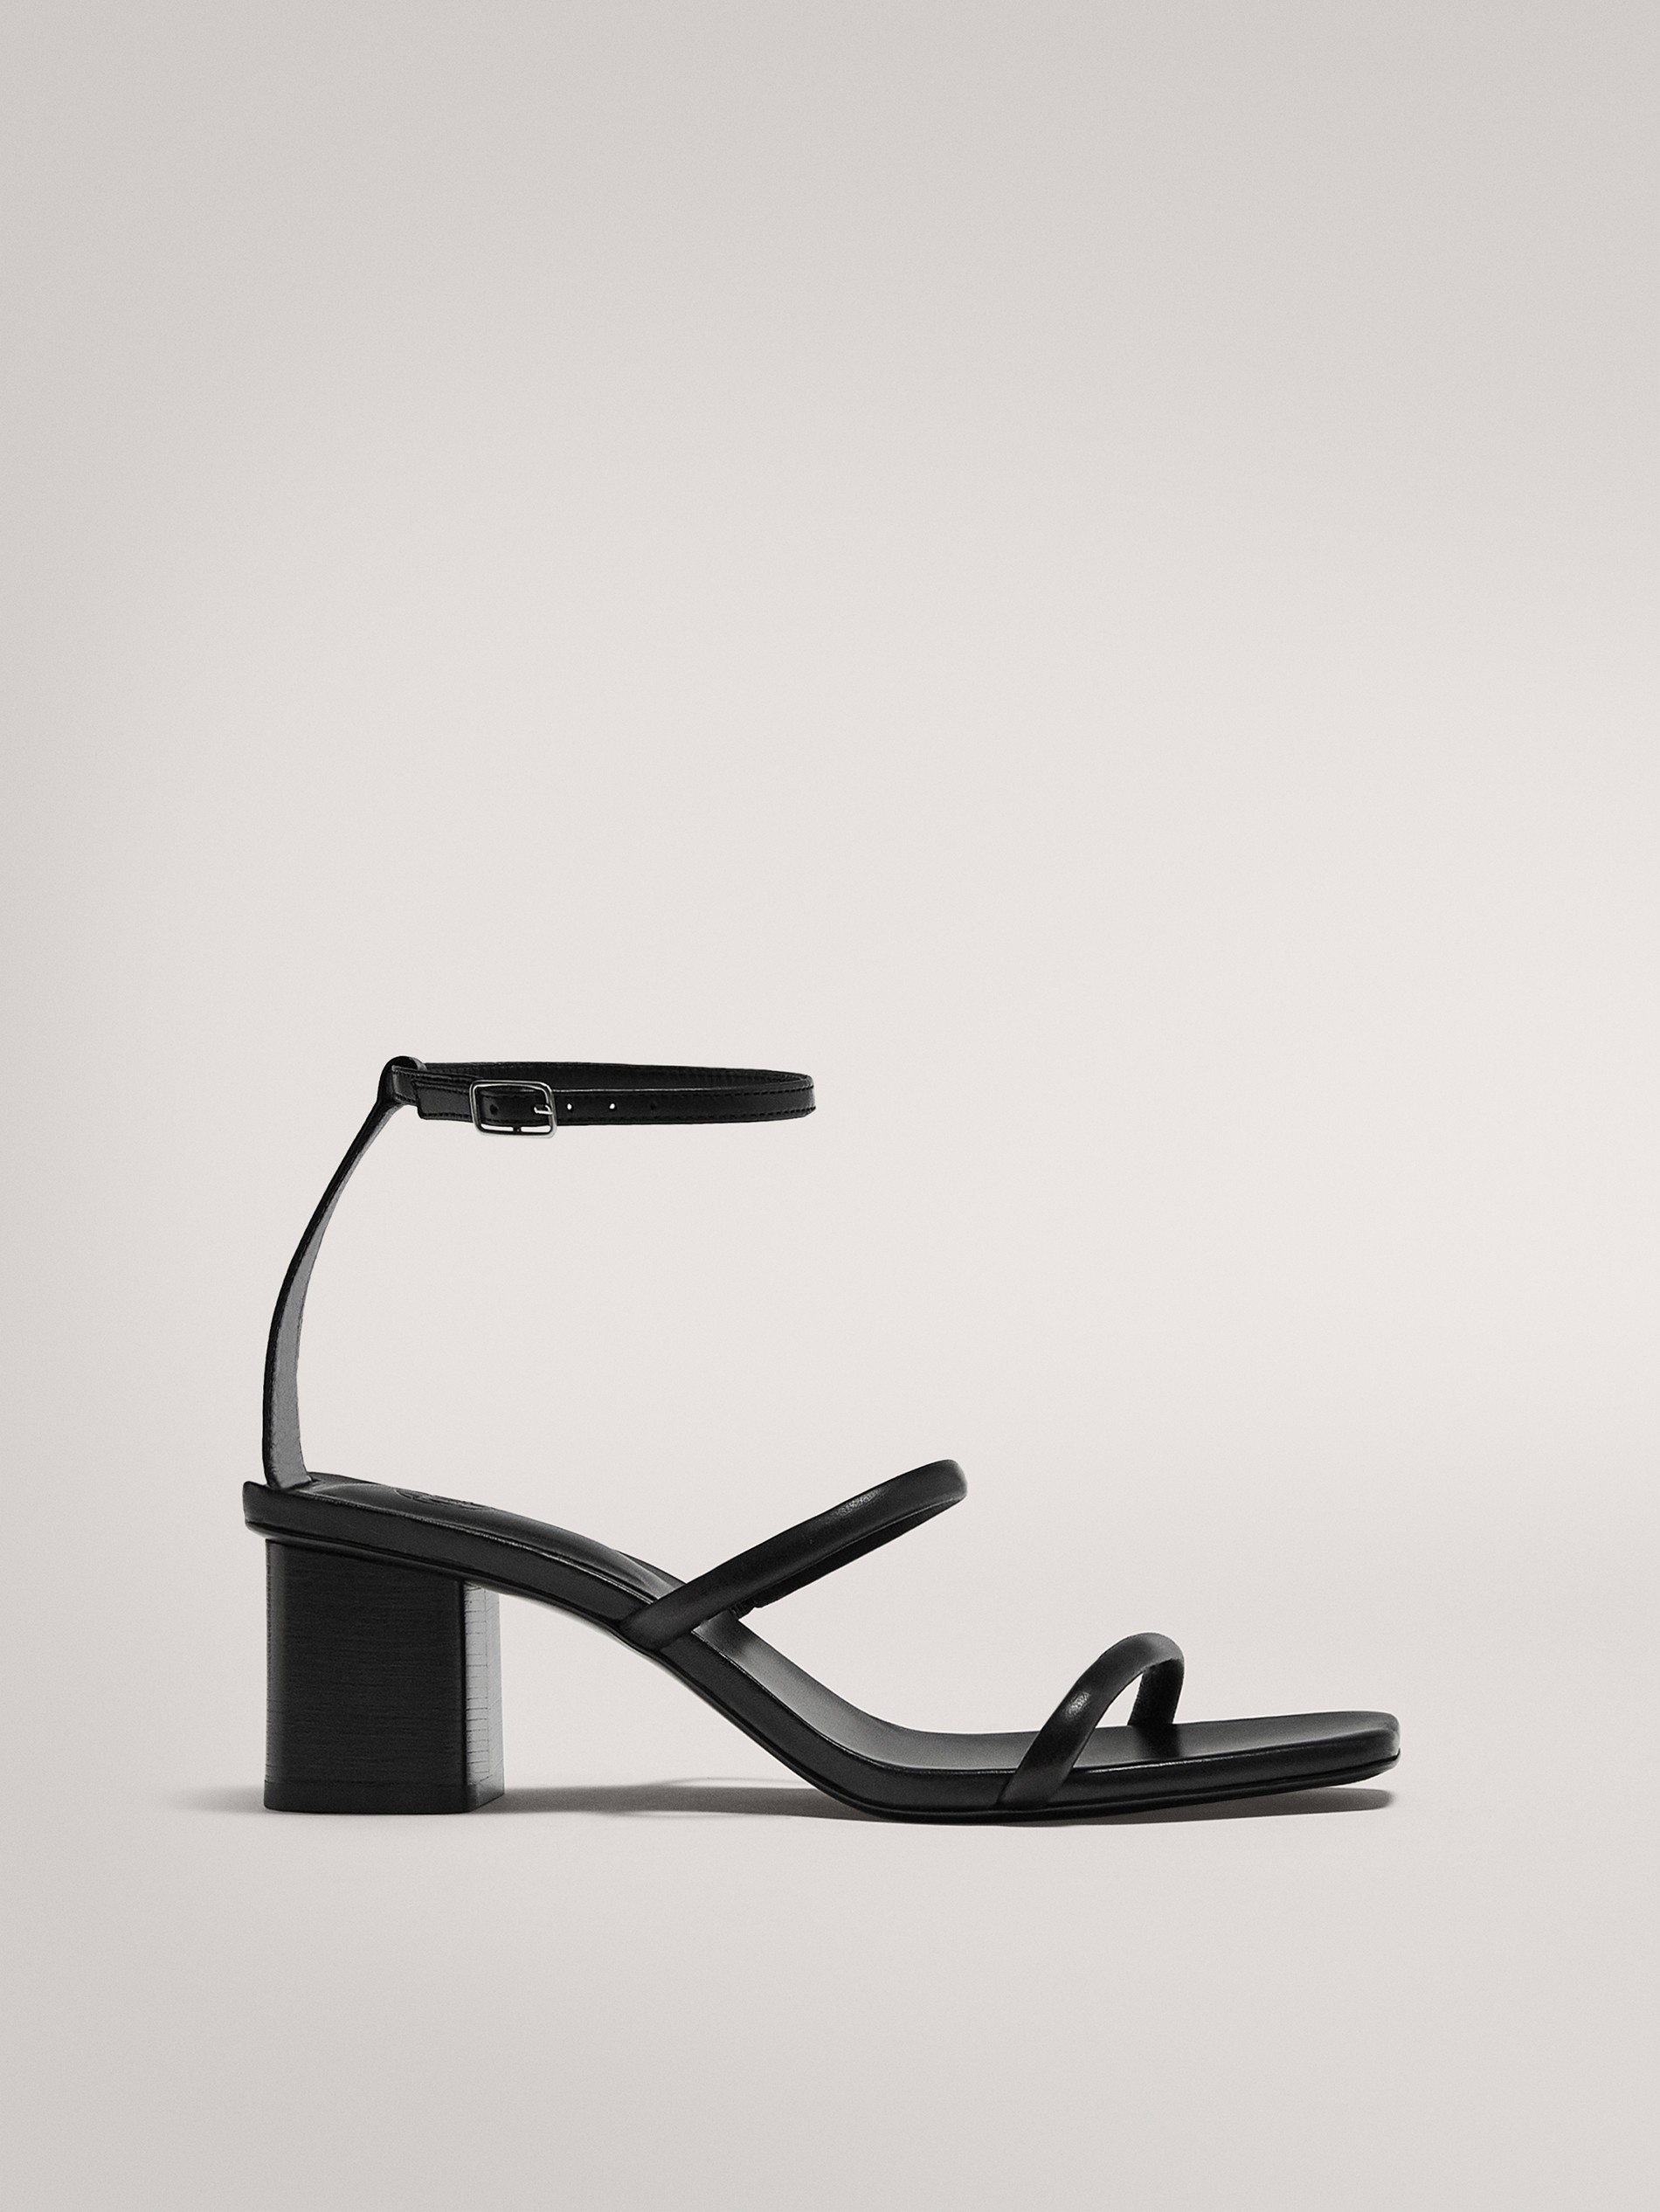 black double strap heels